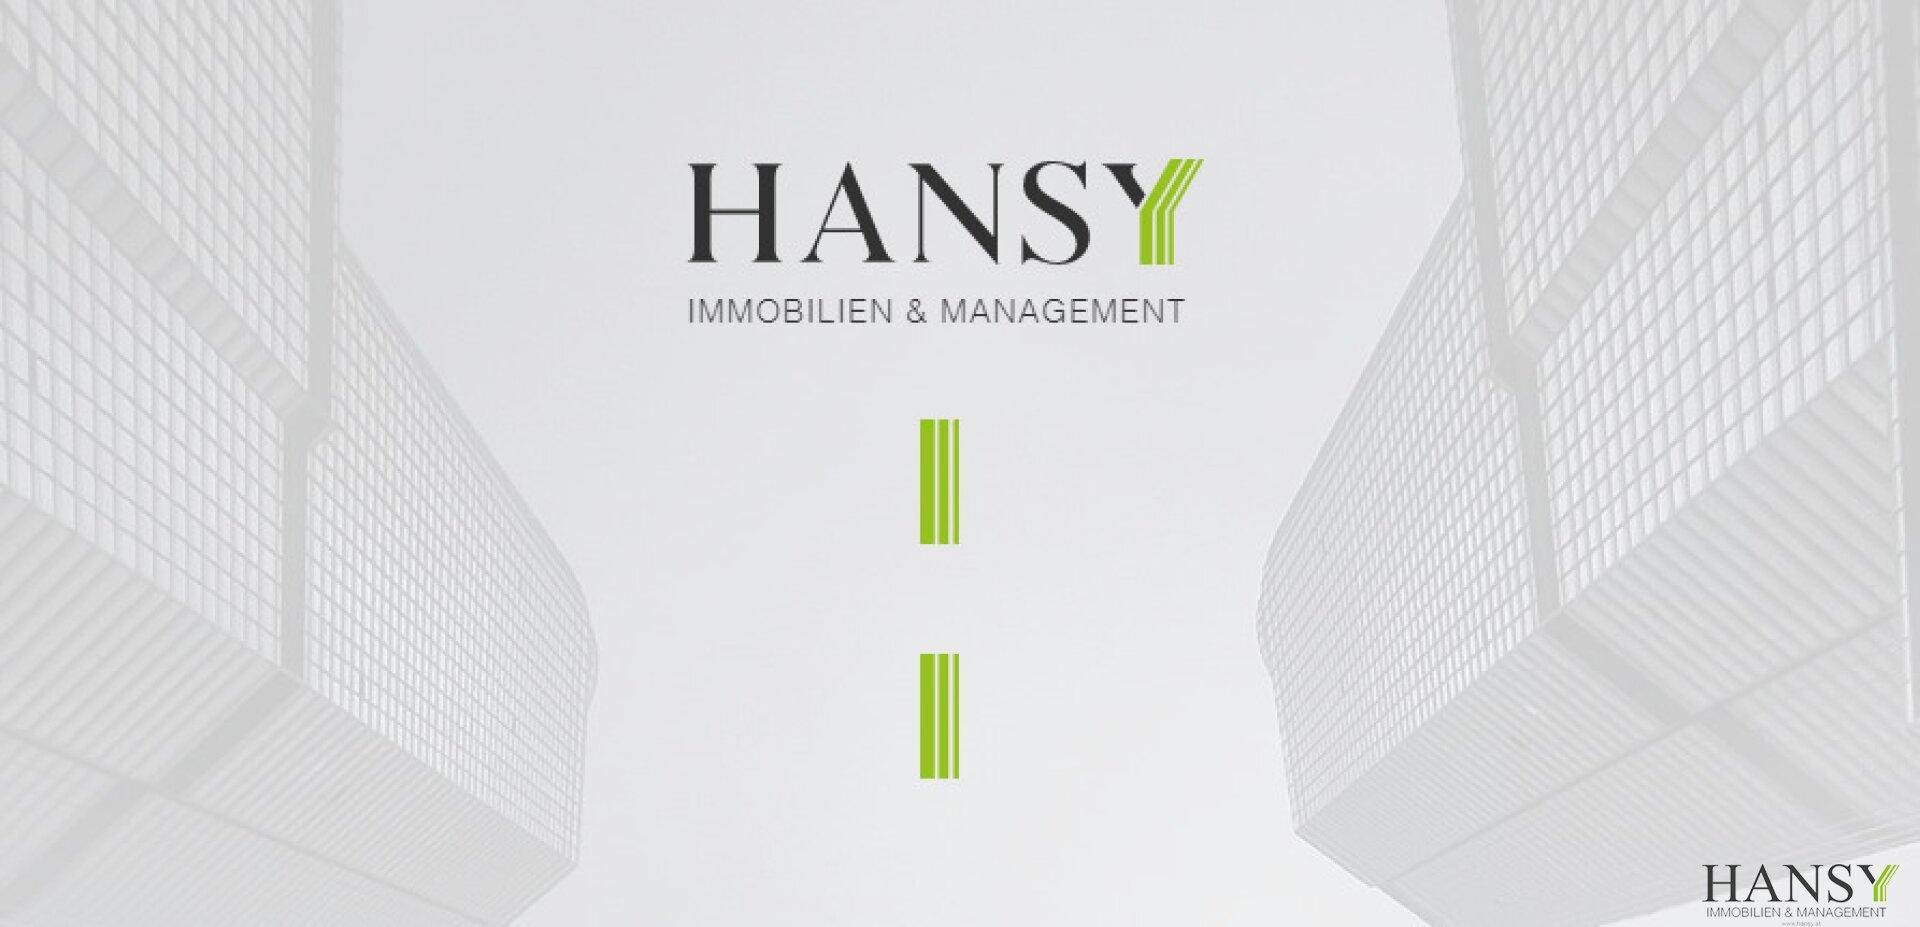 Hansy GmbH